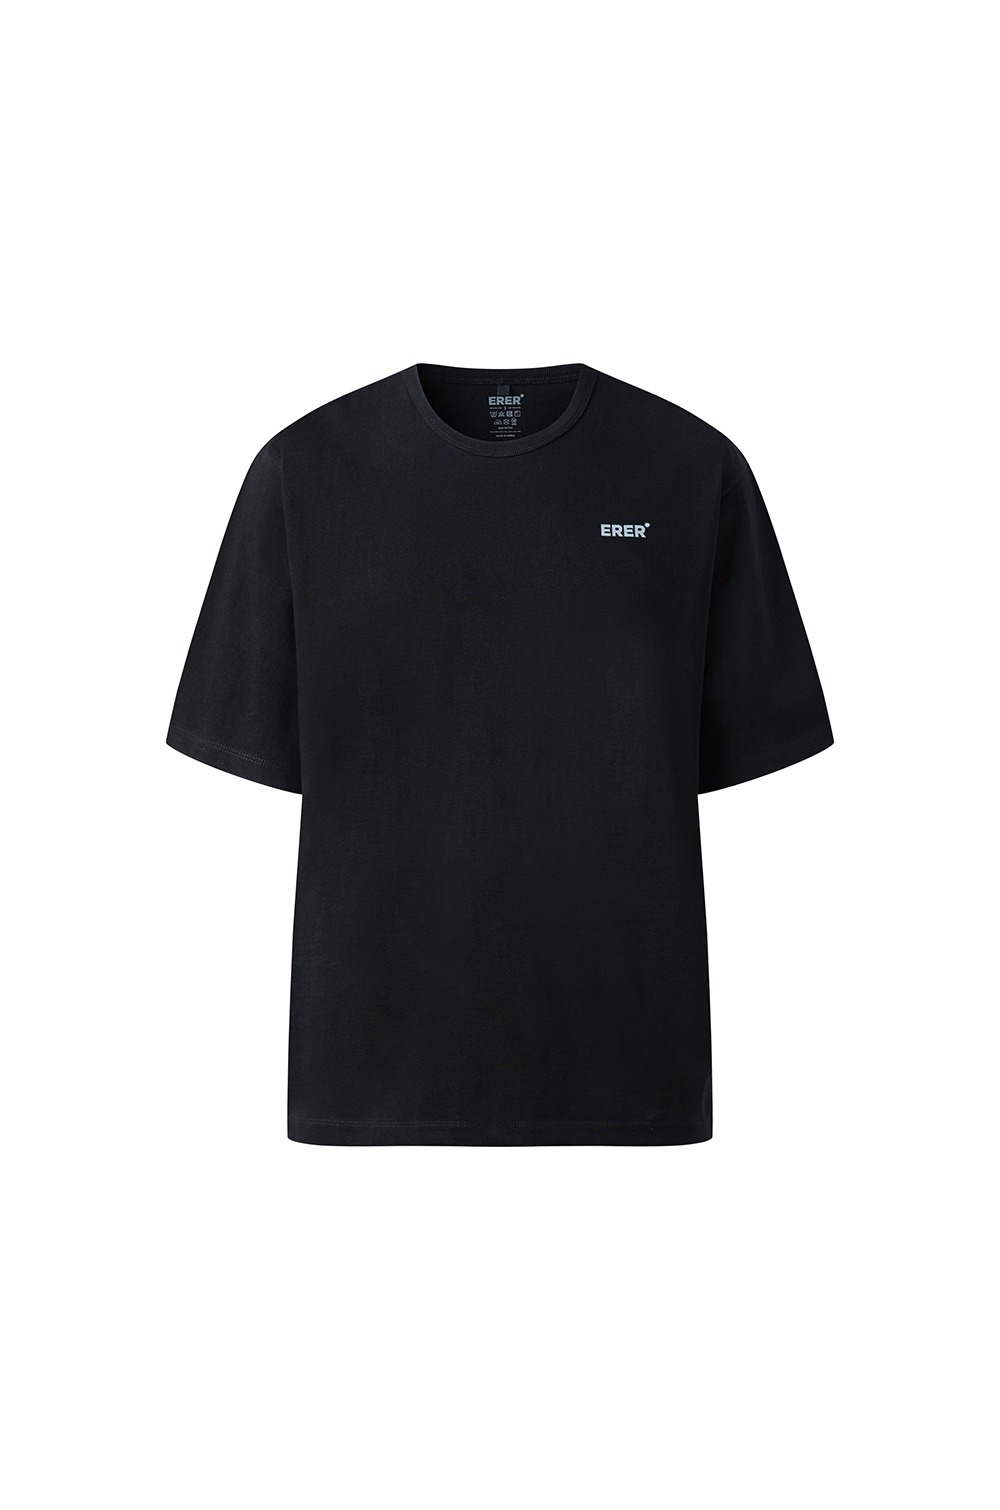 [UN] Basic logo t-shirt - Black